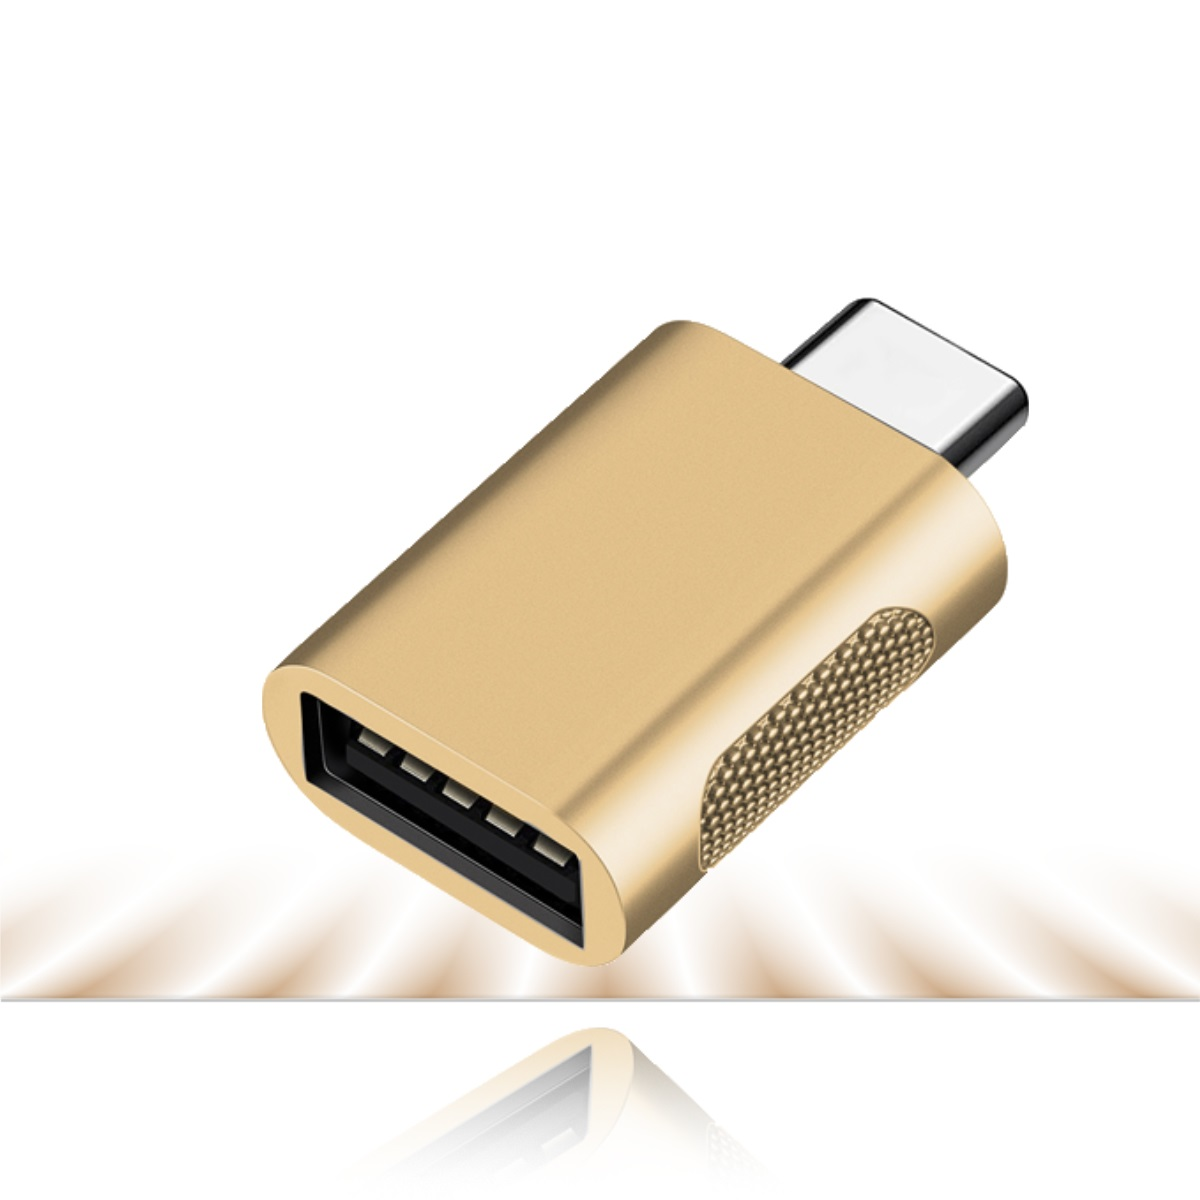 zu C Adapter, Adapter CRADYS Gold USB gold USB